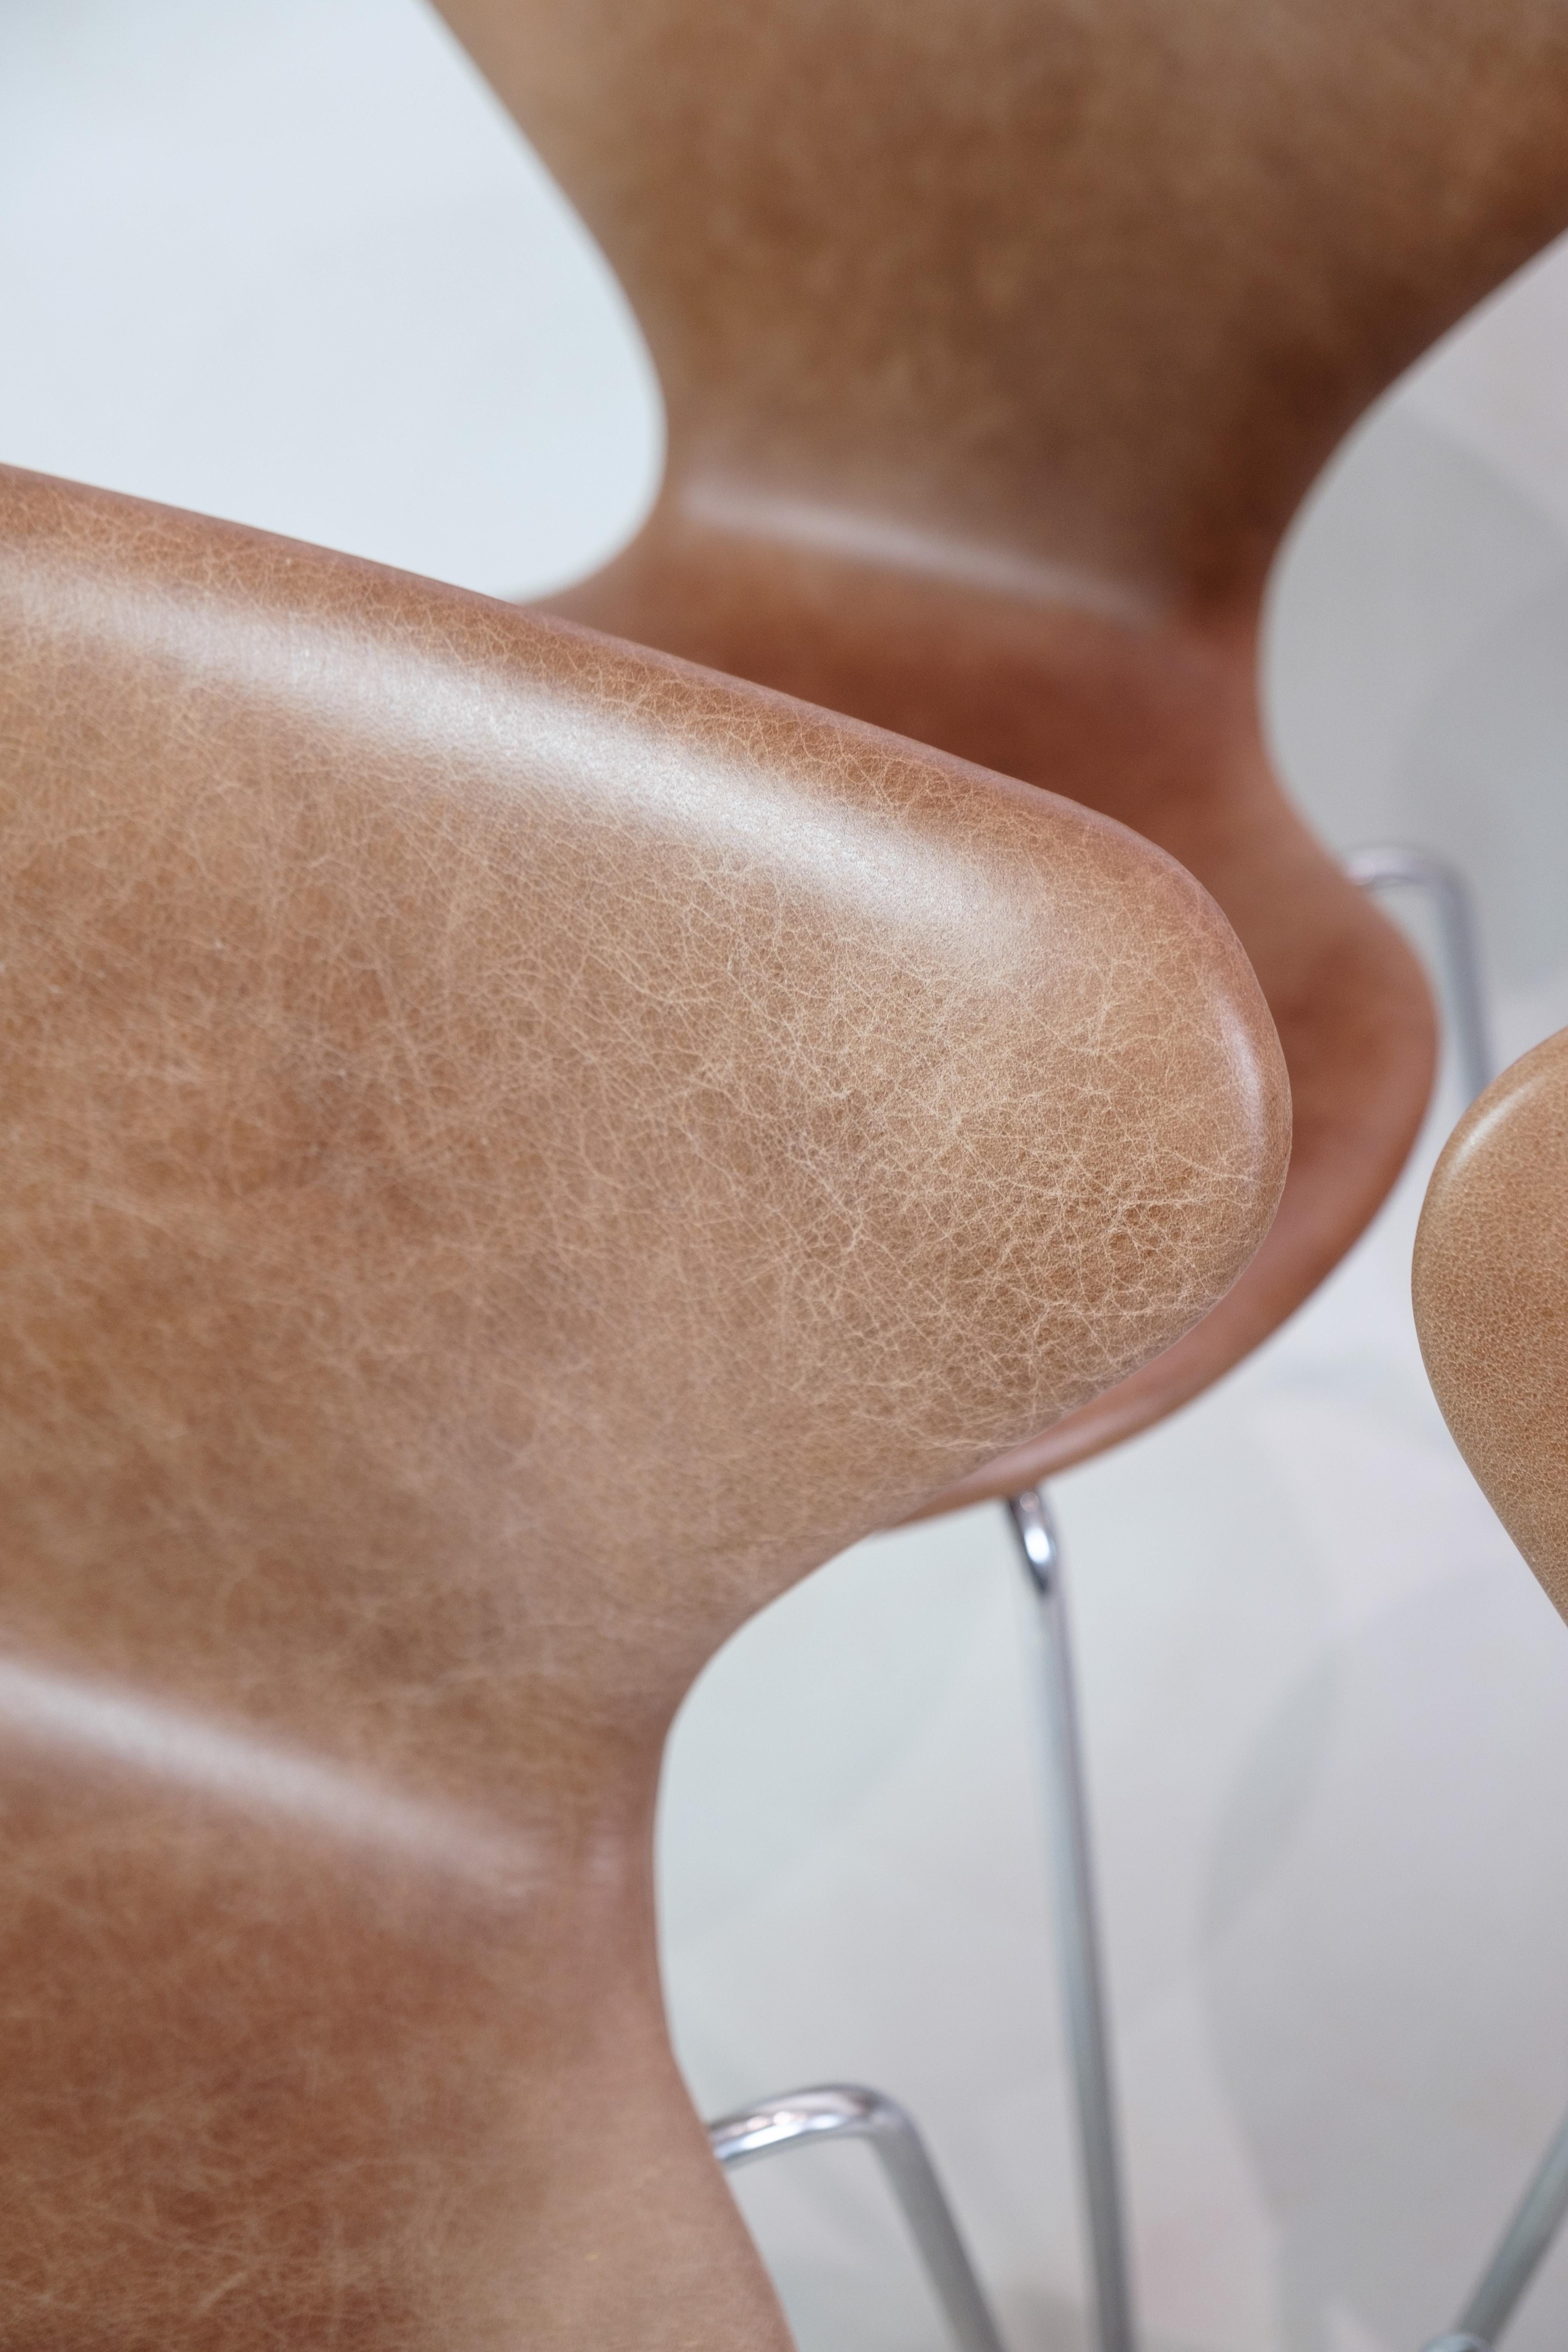 Set of 6 Seven Chairs, 3107, Arne Jacobsen, Fritz Hansen For Sale 3